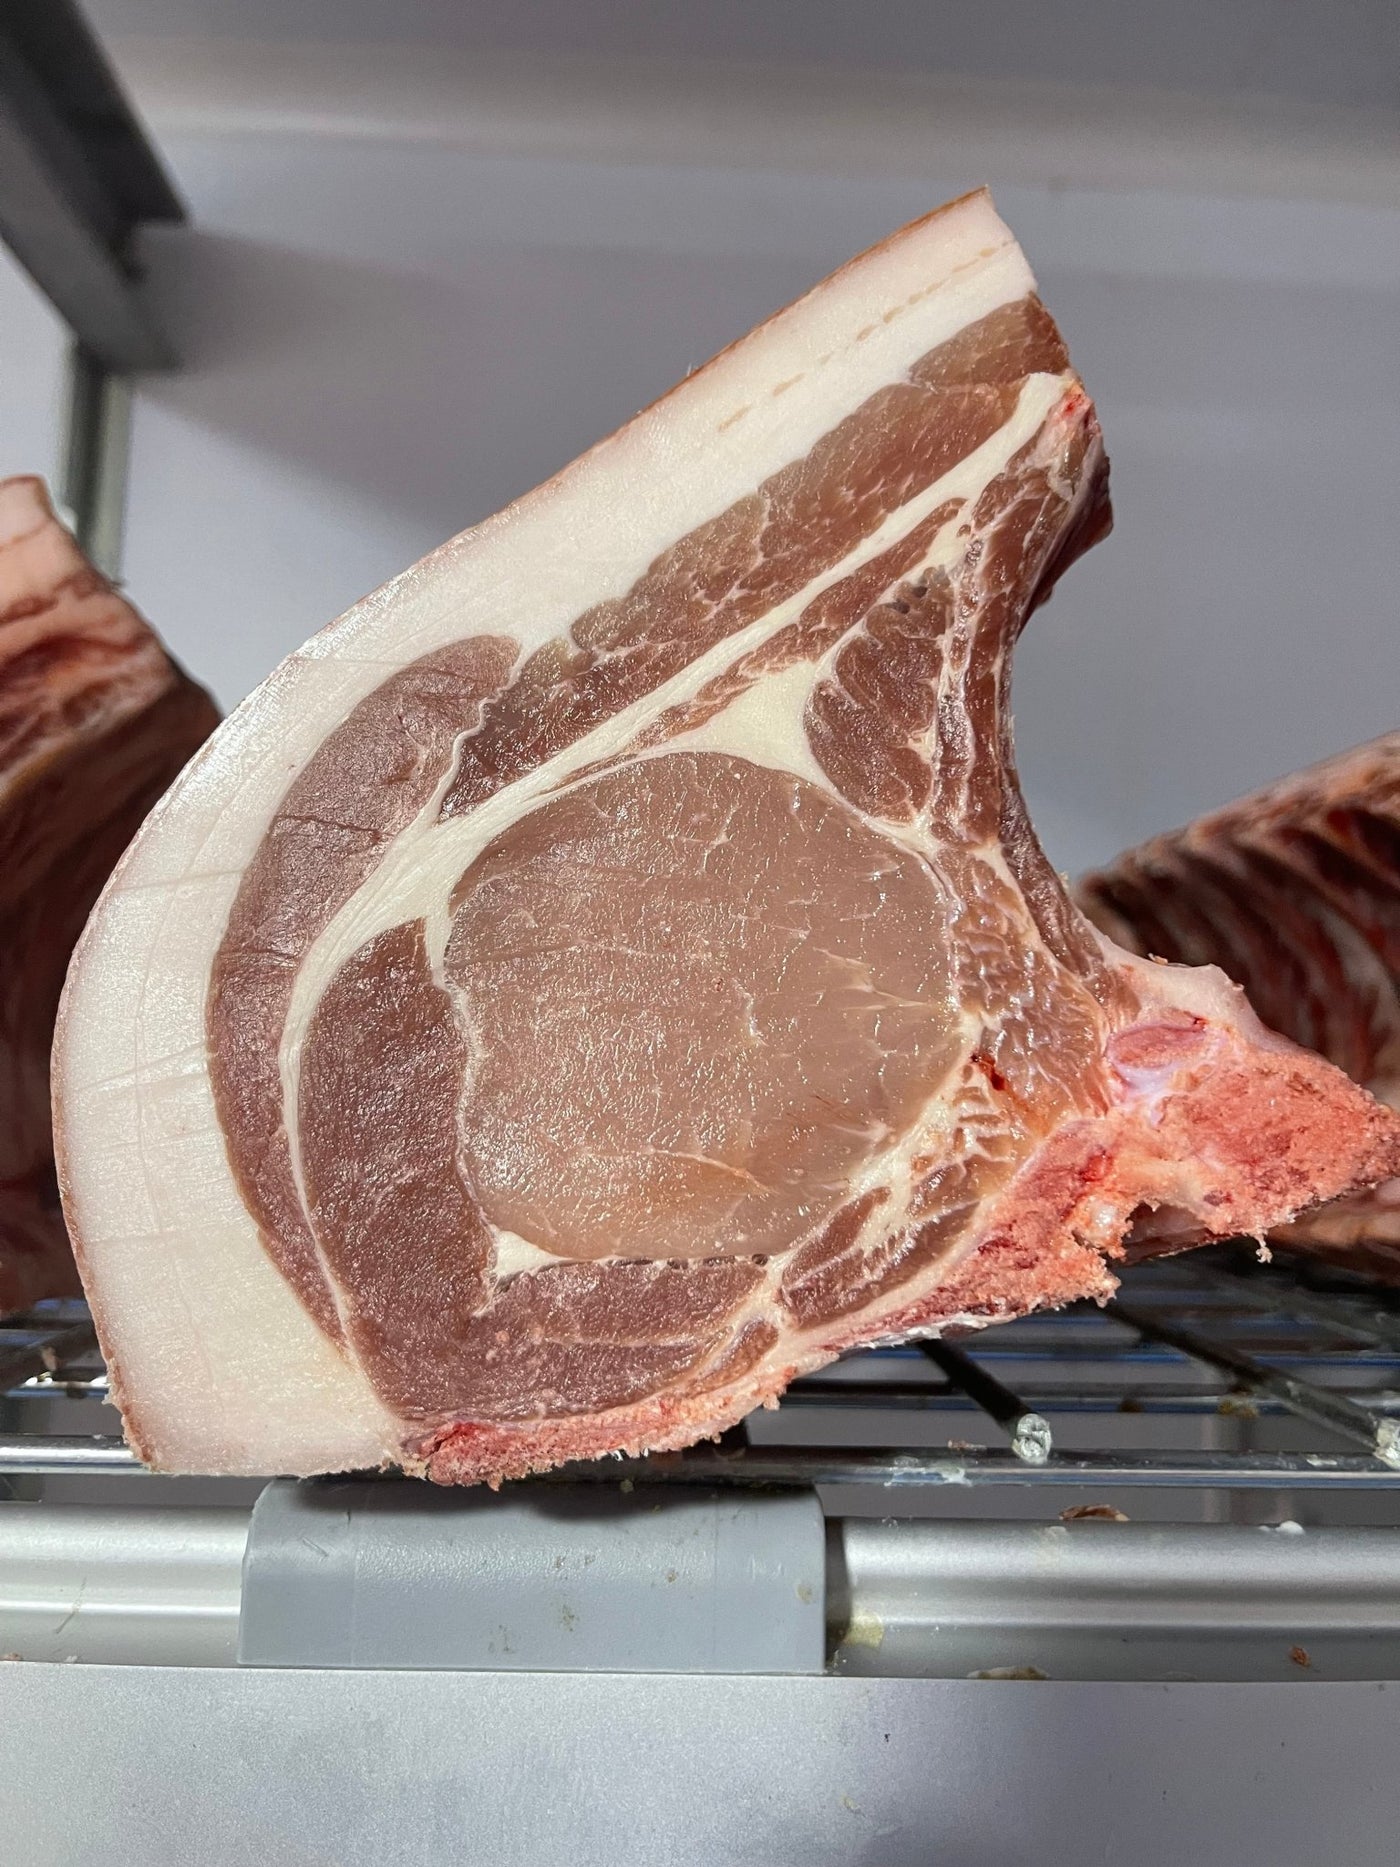 21 Day Dry-Aged, Free Range Pork Chop - Pork - Thomas Joseph Butchery - Ethical Dry-Aged Meat The Best Steak UK Thomas Joseph Butchery